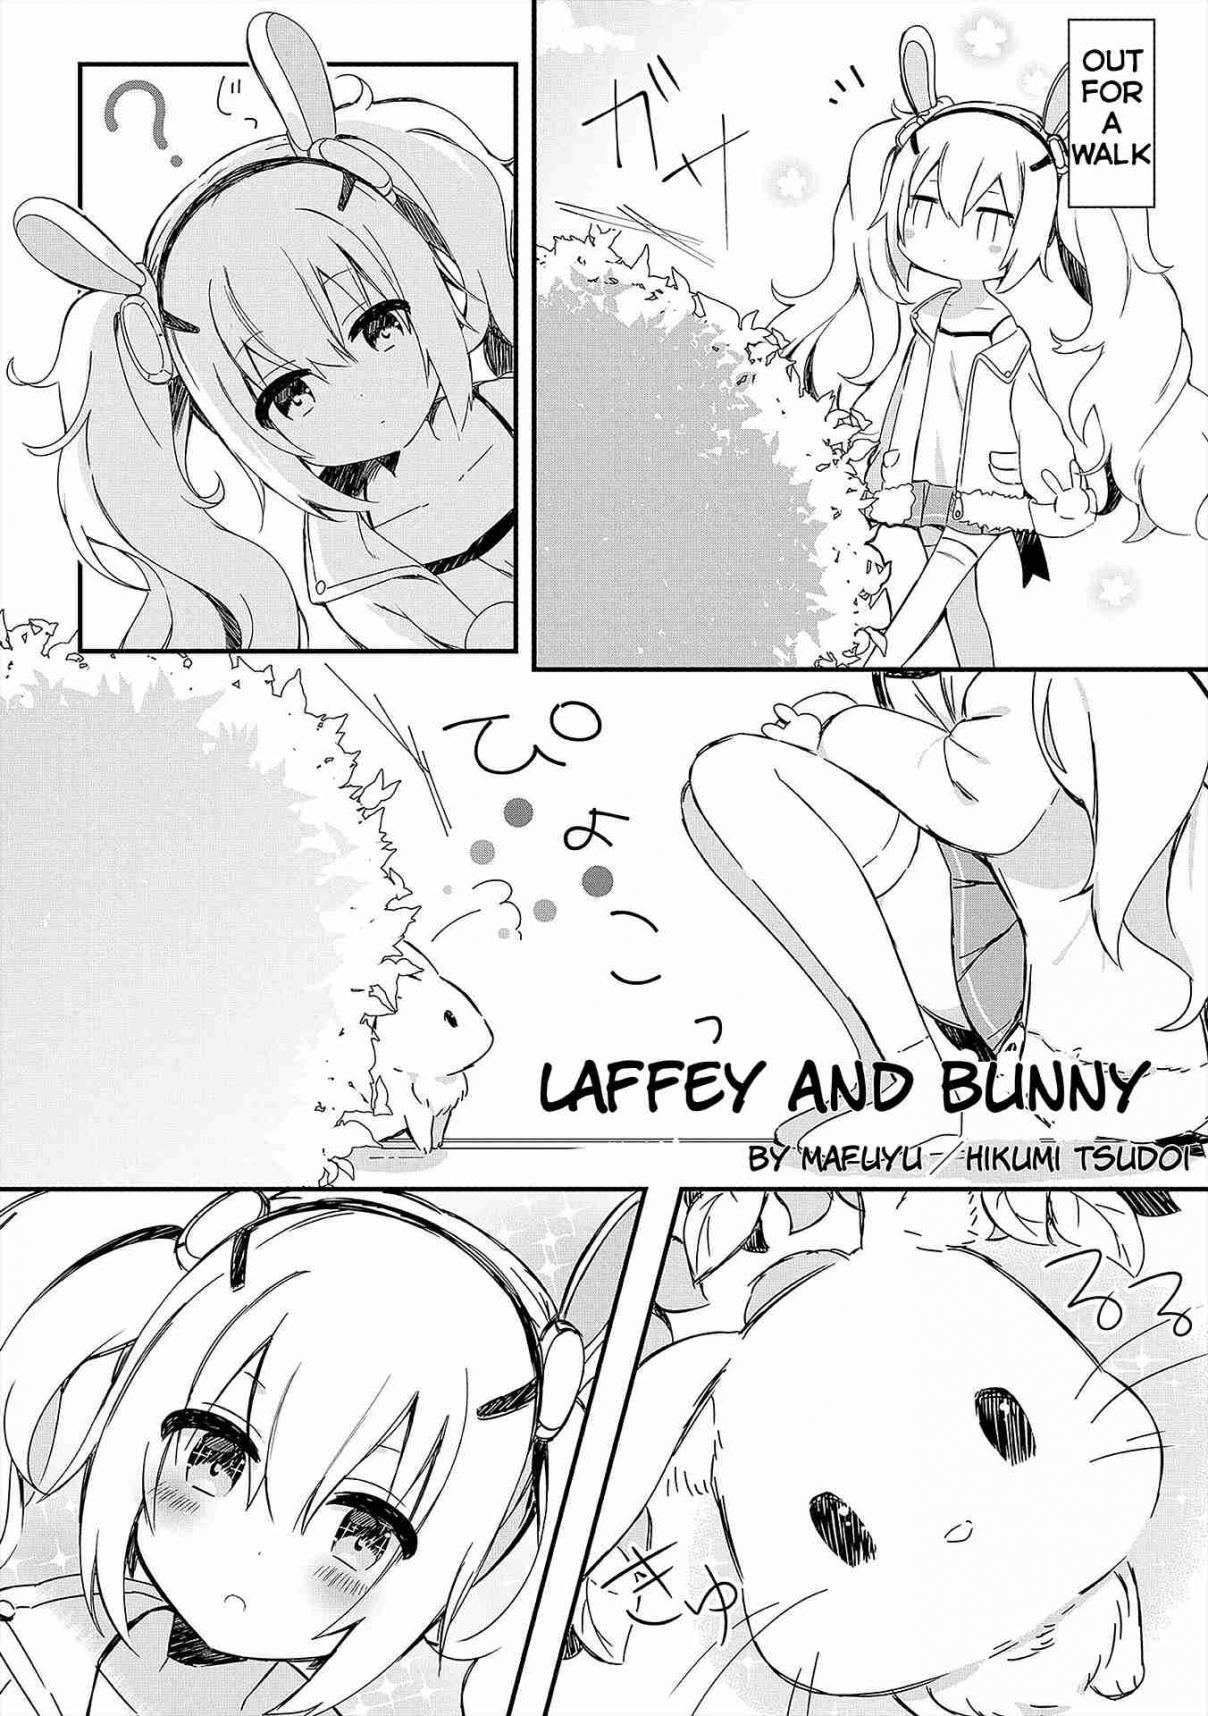 Azur Lane Comic Anthology vol. 2 Vol. 2 Ch. 10 Laffey and Bunny